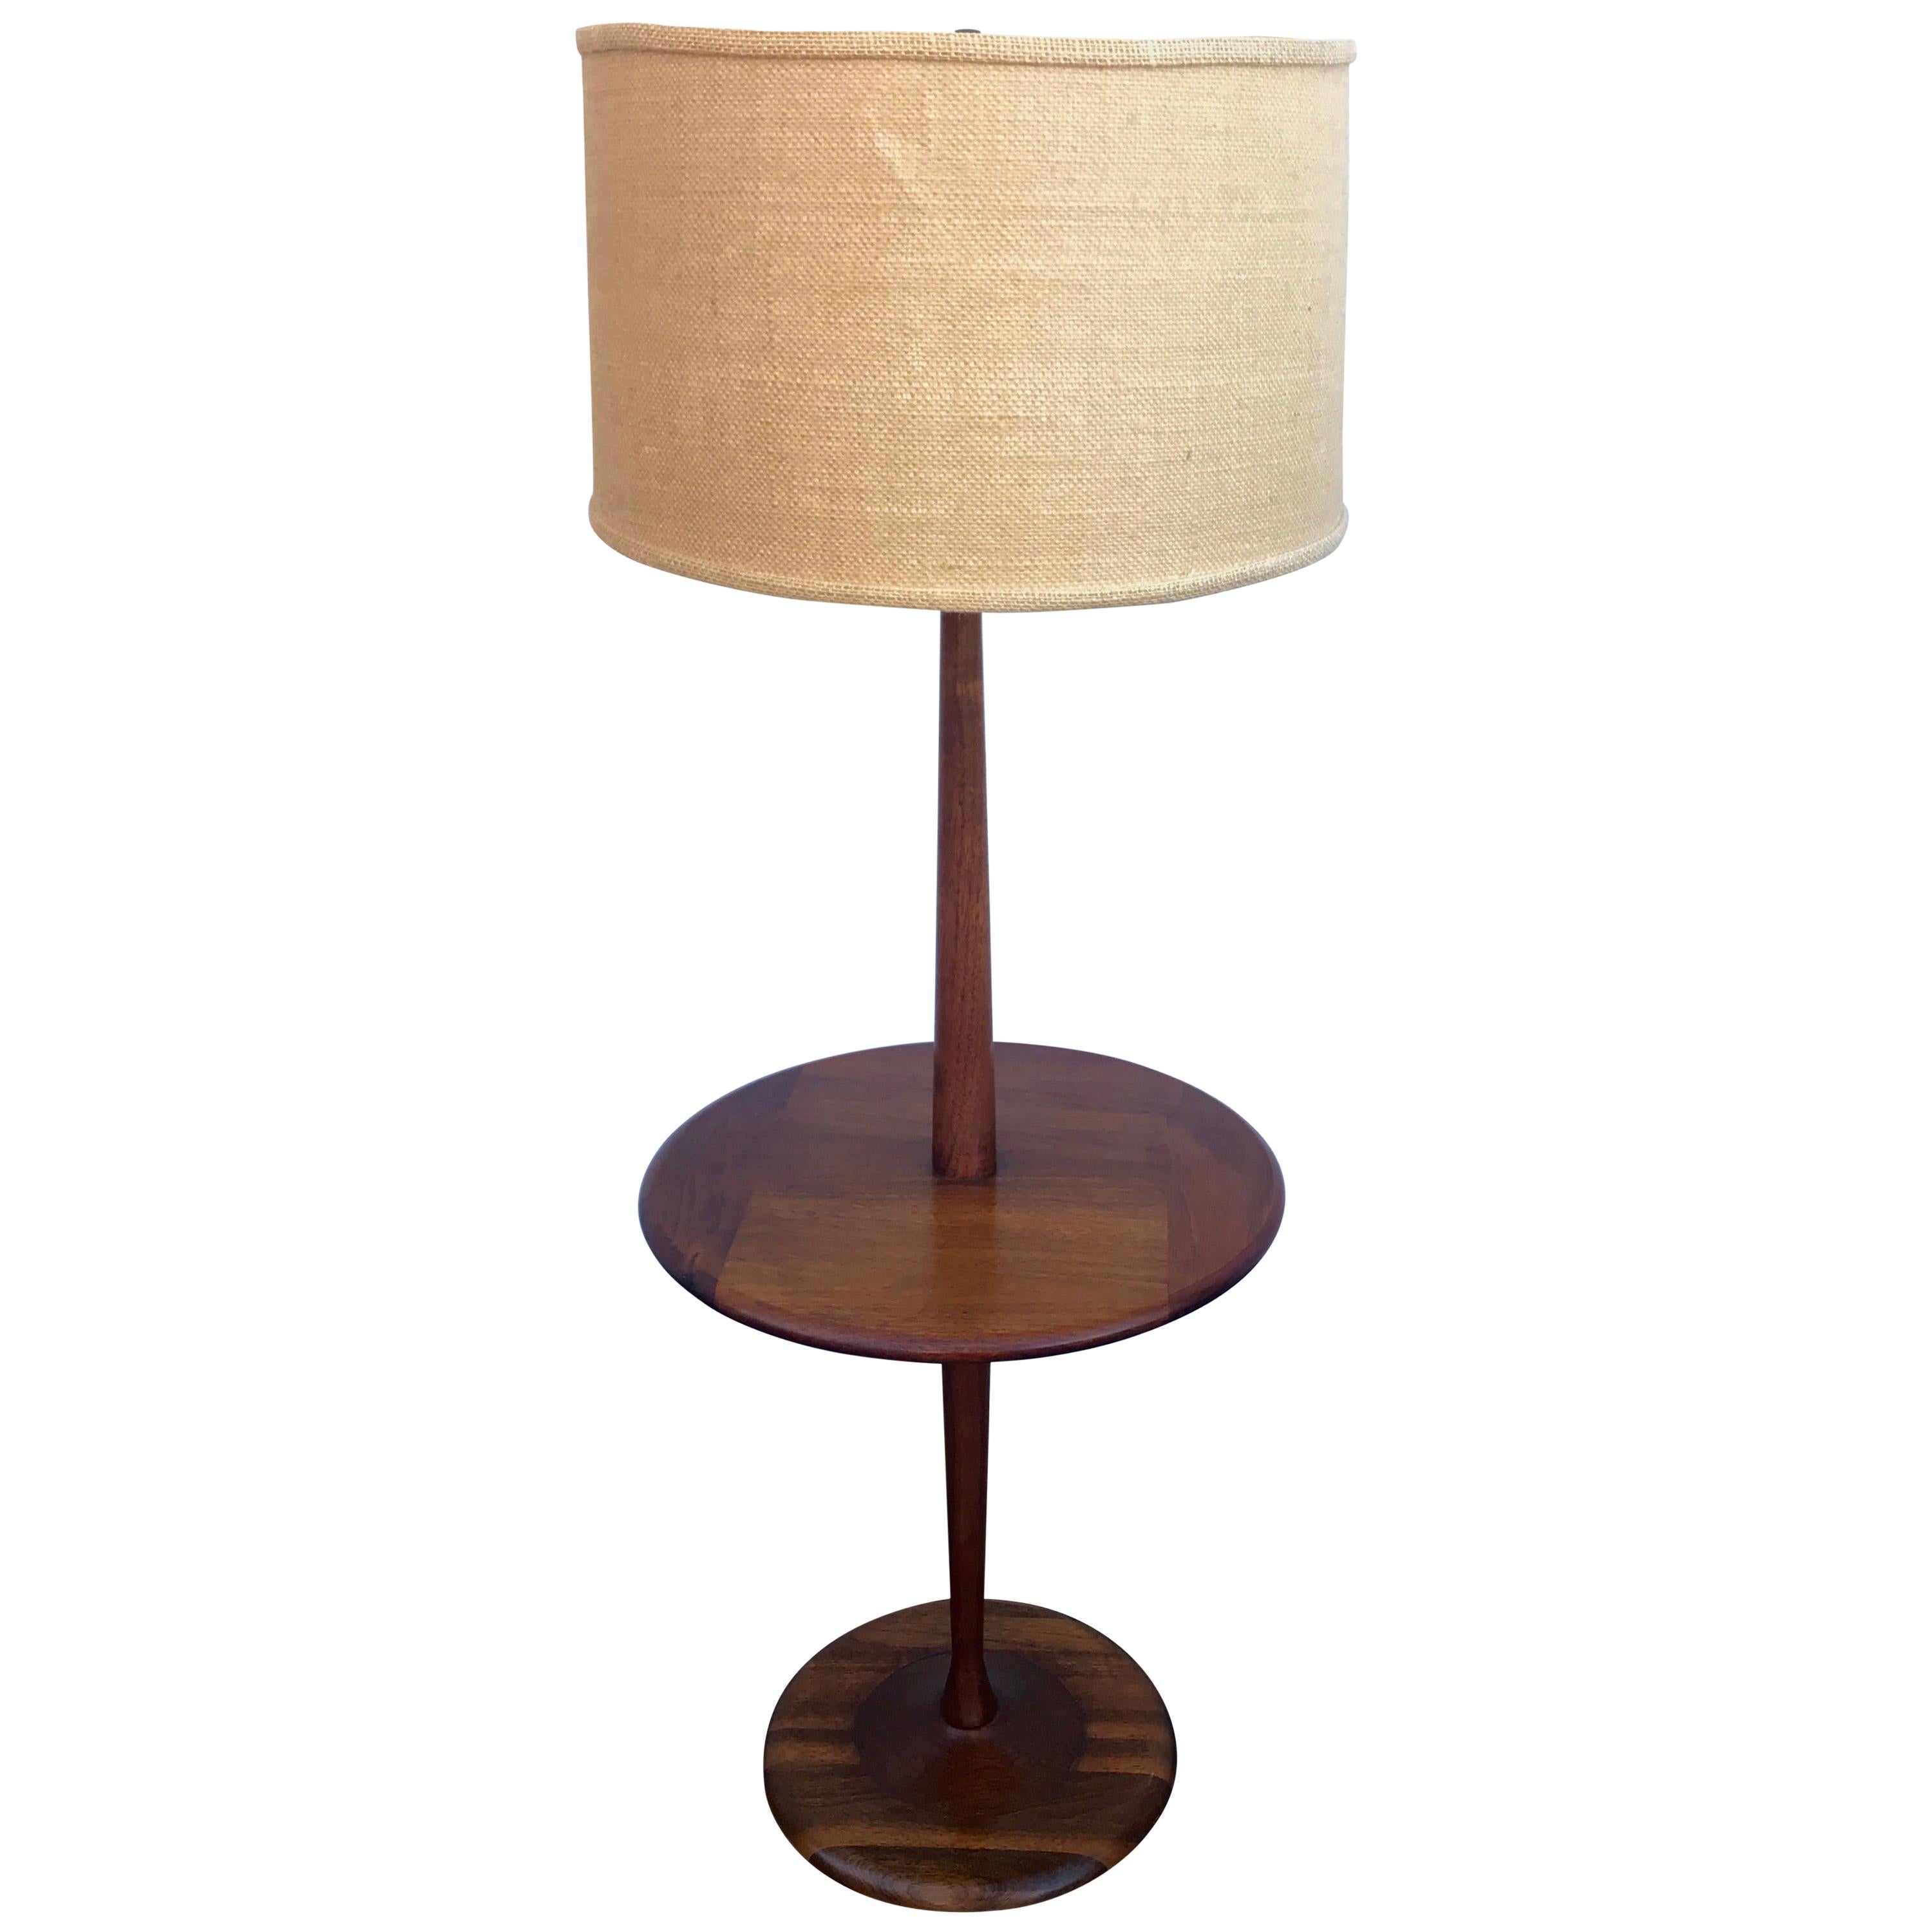 Laurel Walnut Mid-Century Modern Floor Lamp with Table, circa 1960s For Sale